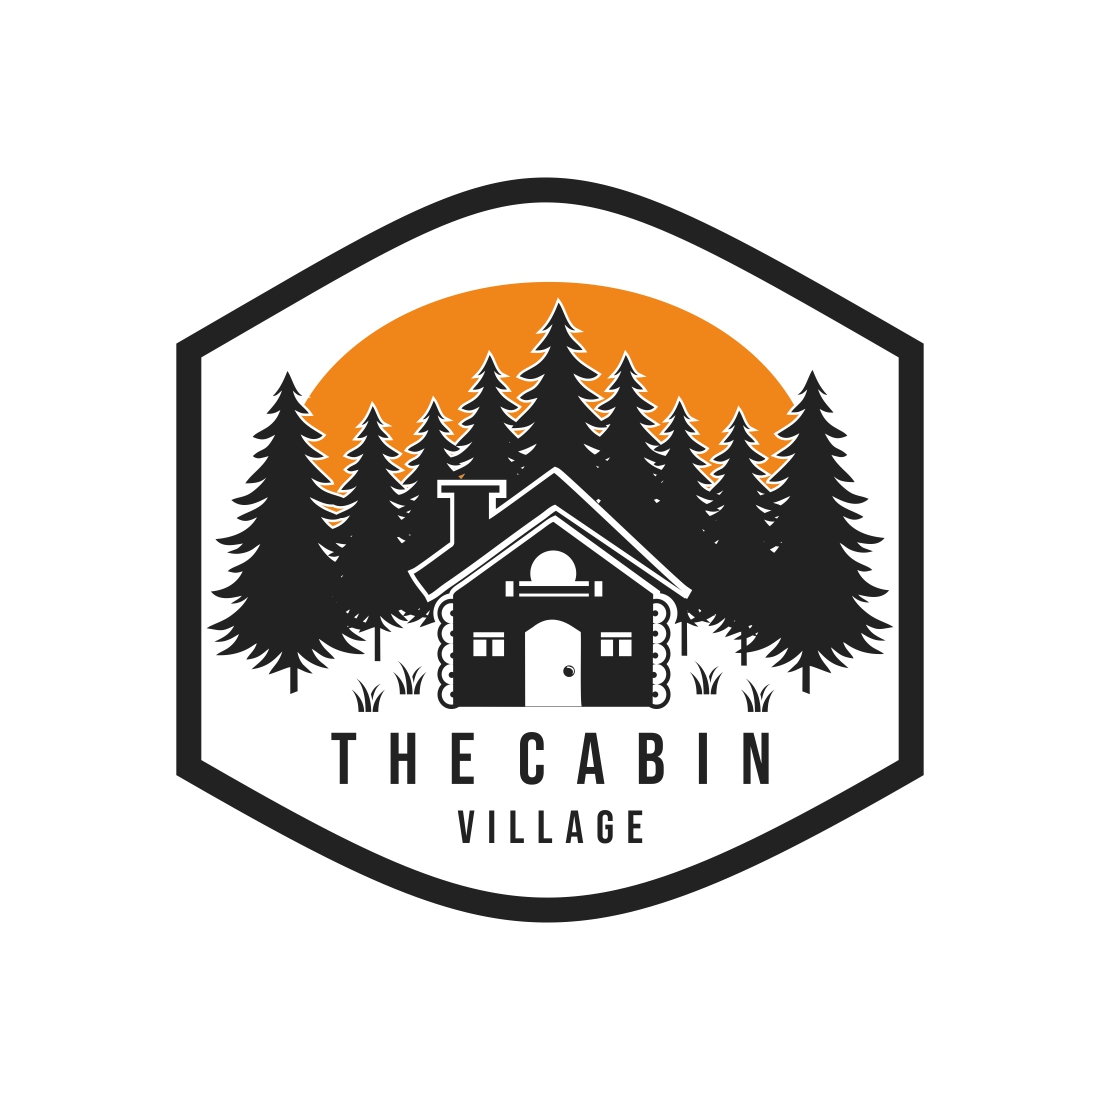 Cabin village logo vector lodge house illustration cover image.